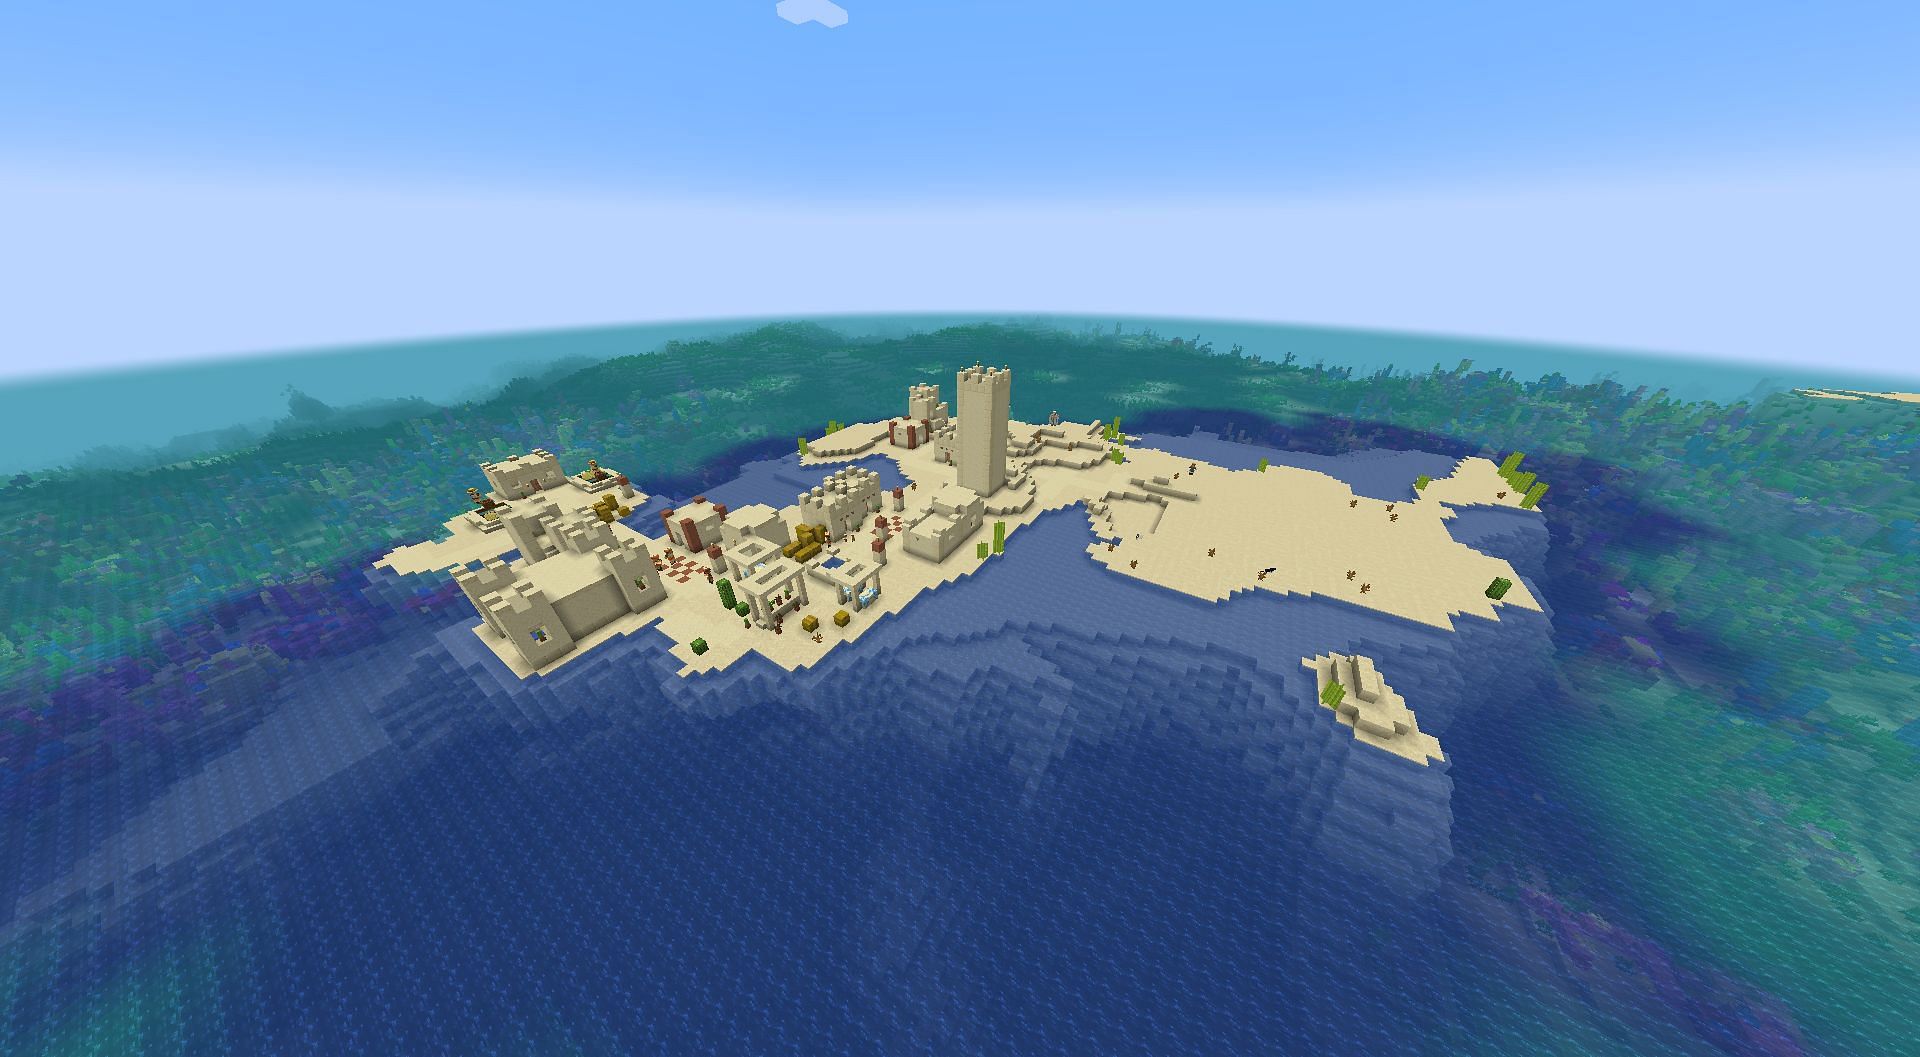 Desert island with village (Image via u/Mortal_Mantis on Reddit)